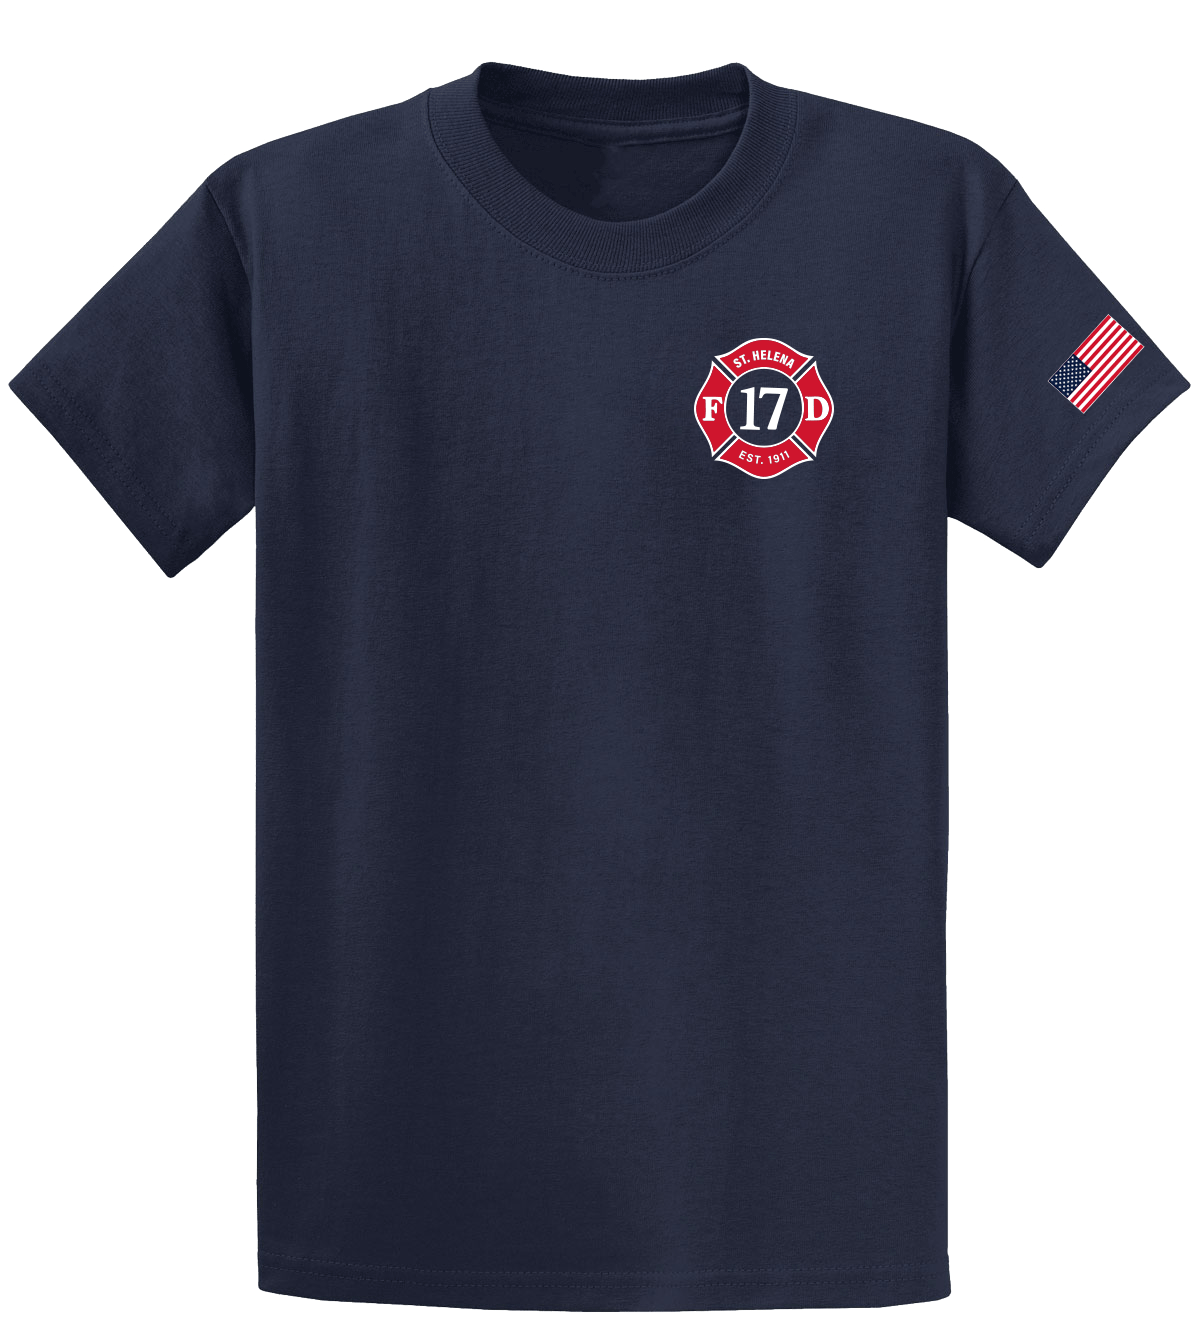 St. Helena USA Made Tall S/S T-Shirt